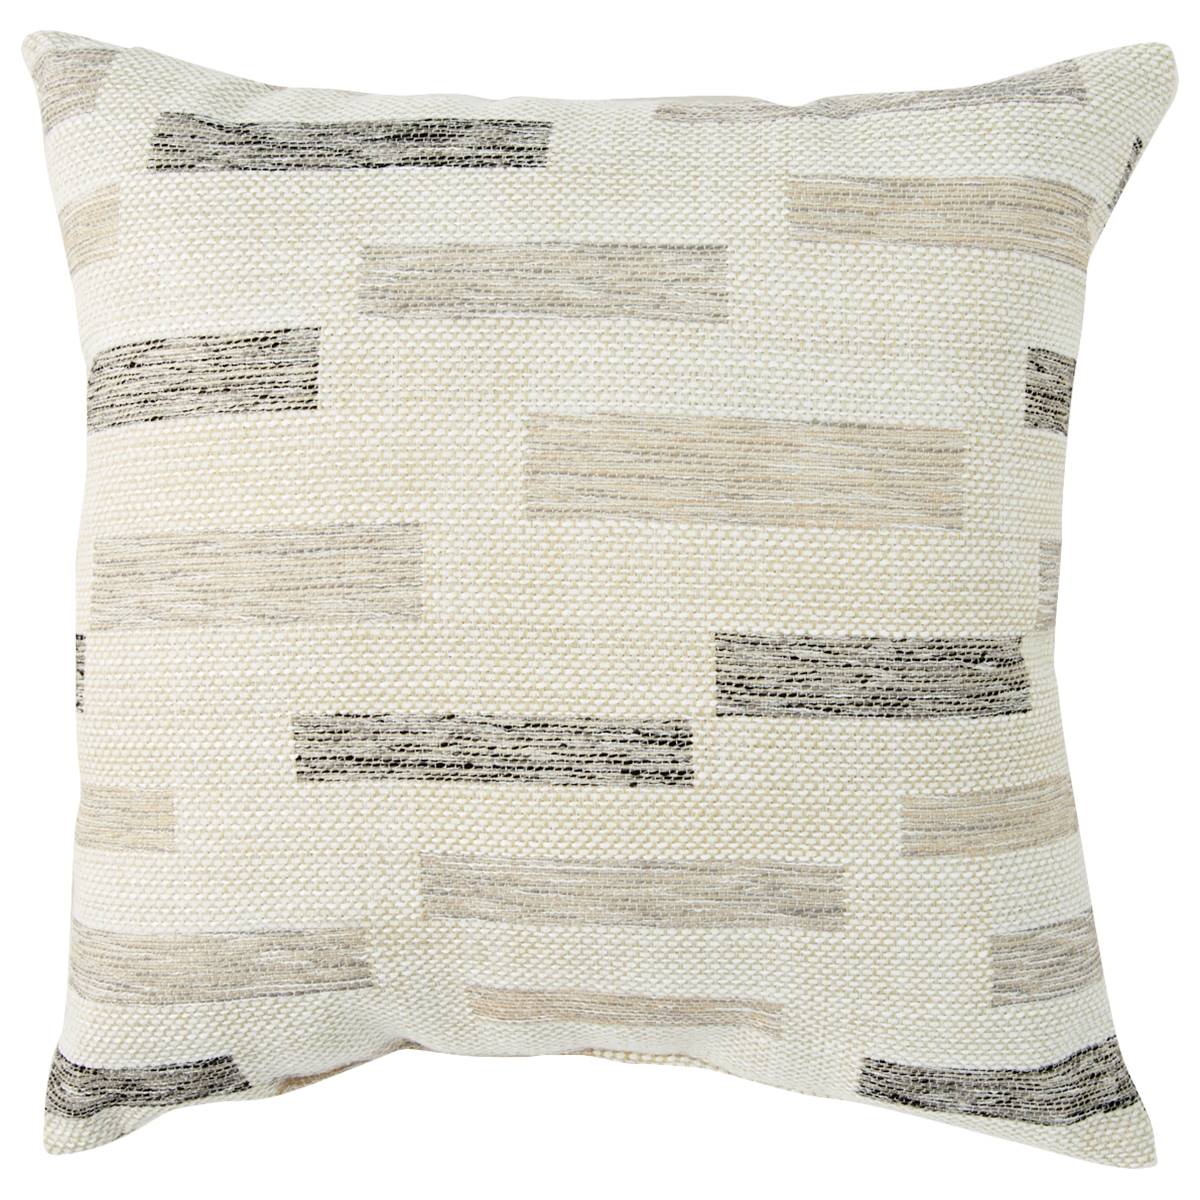 Big Block Weave Decorative Pillow - 18x18